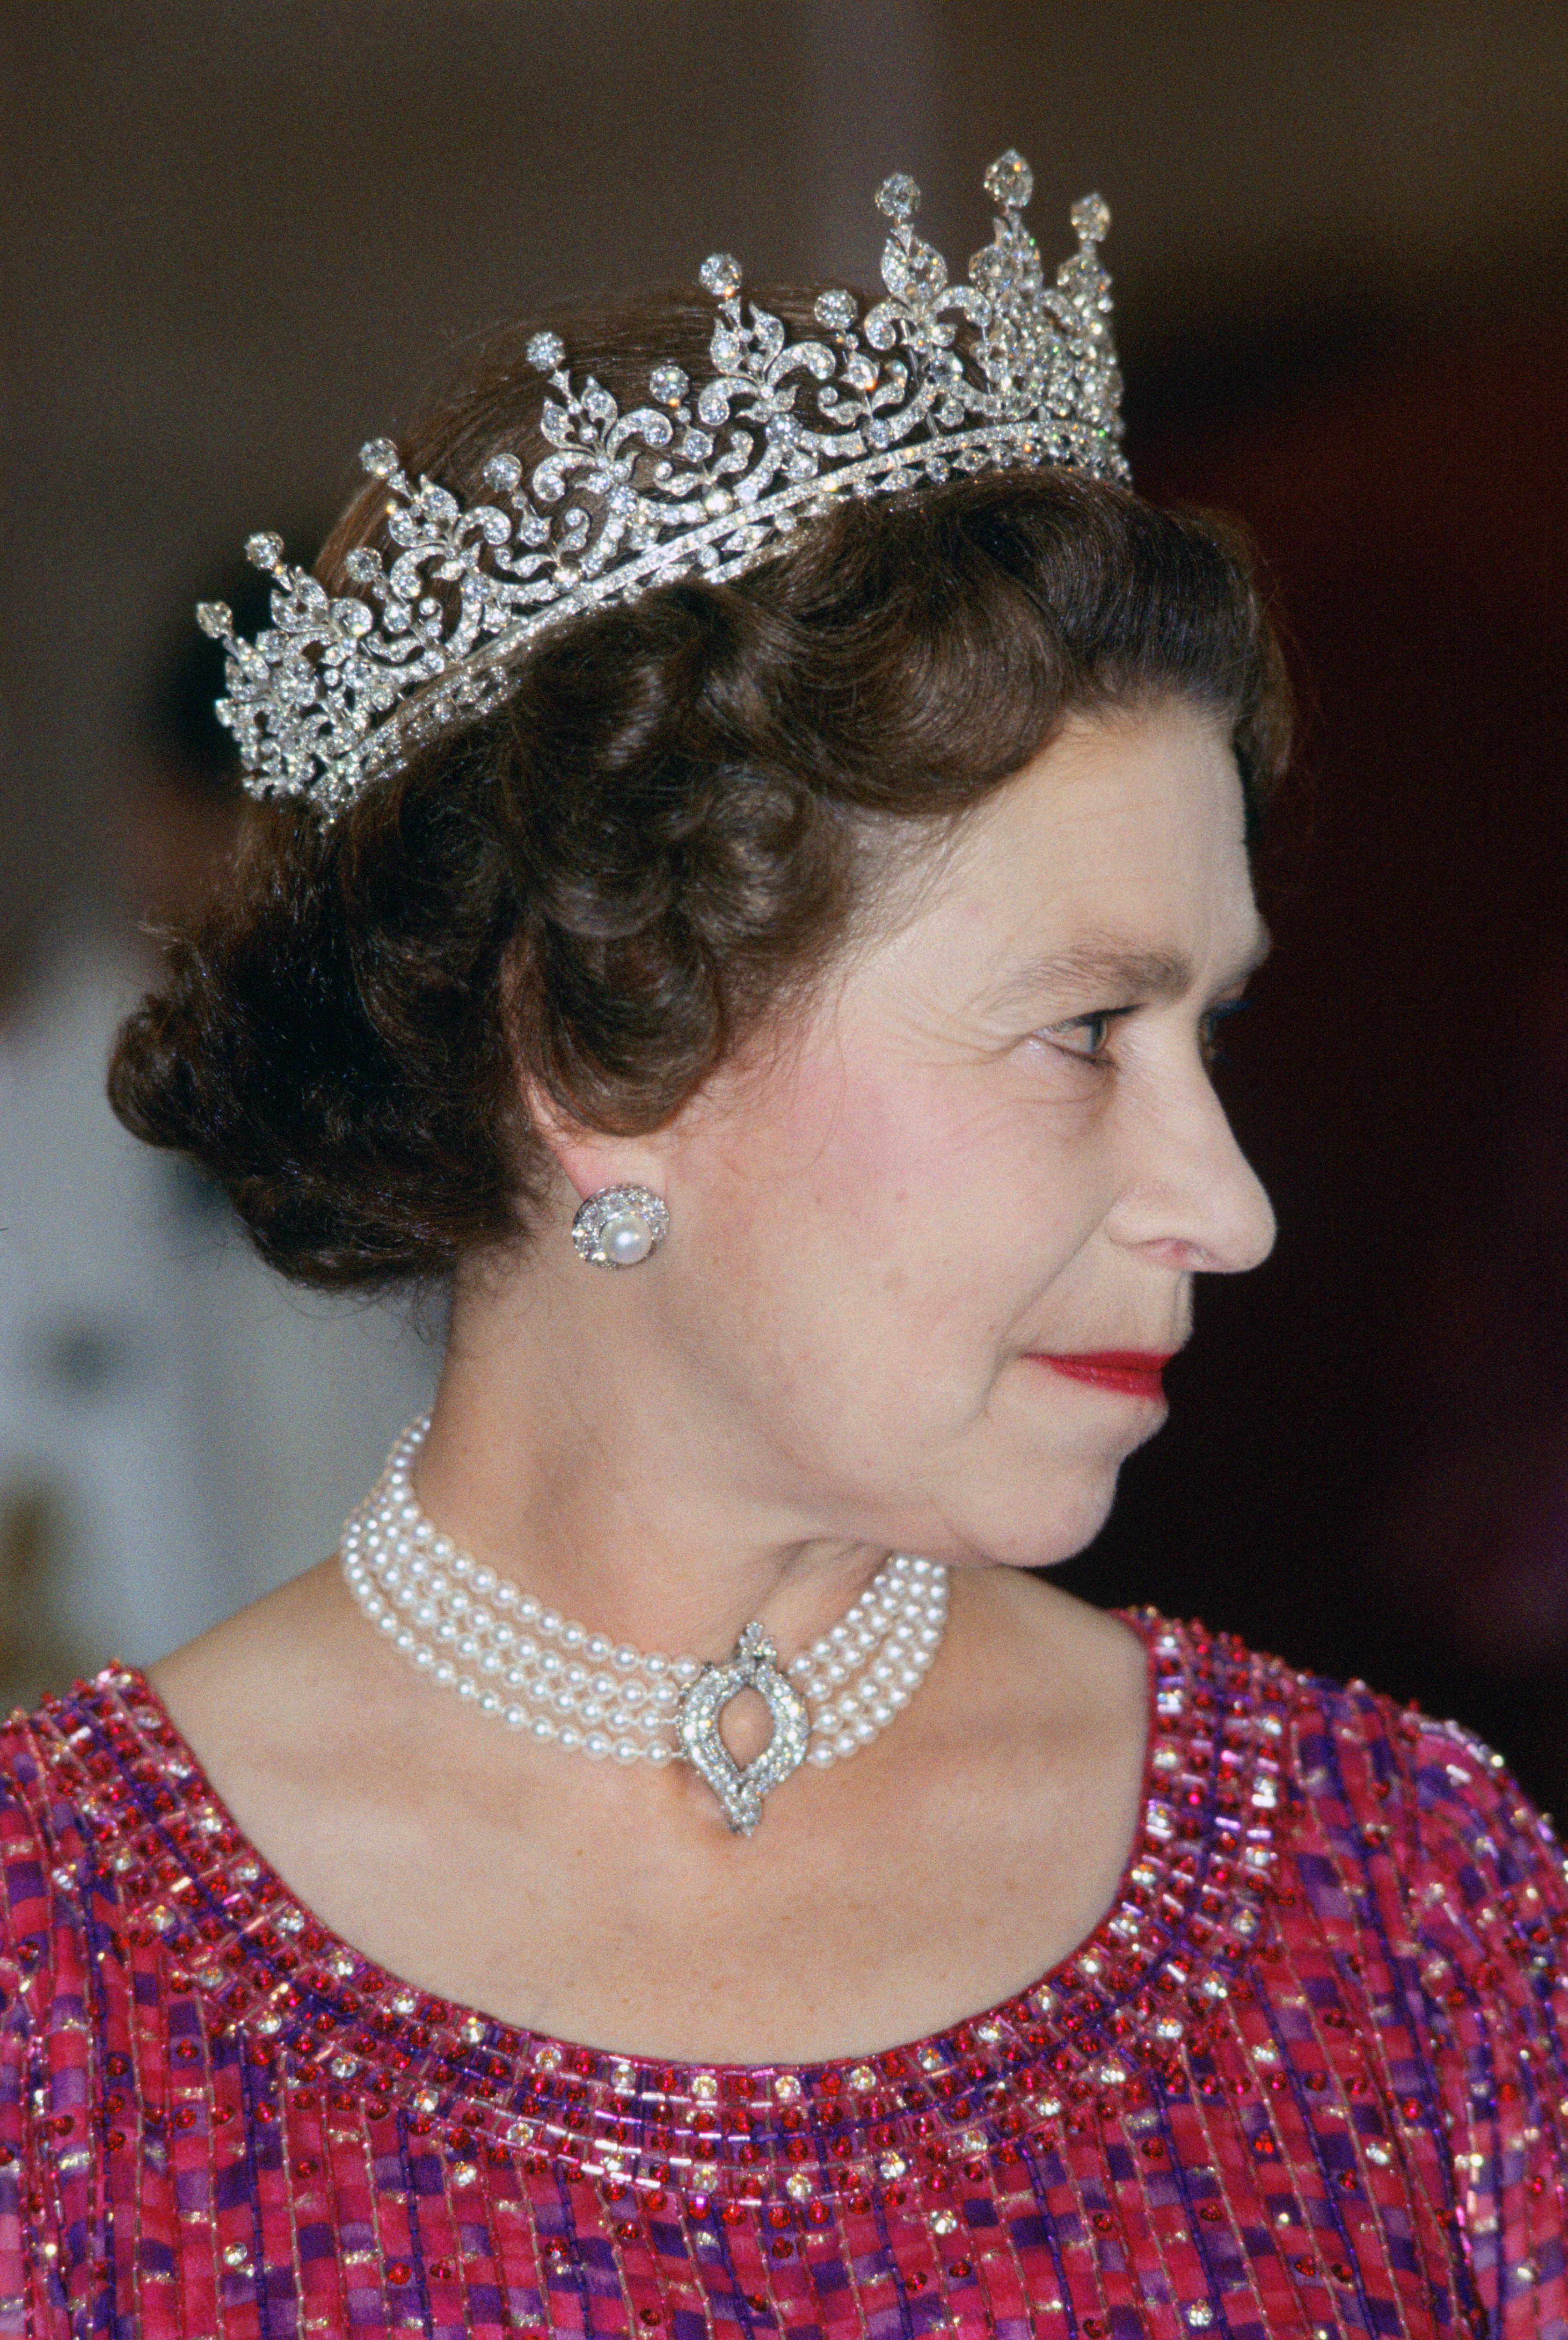 Queen Elizabeth wearing pearl choker with diamond clasp